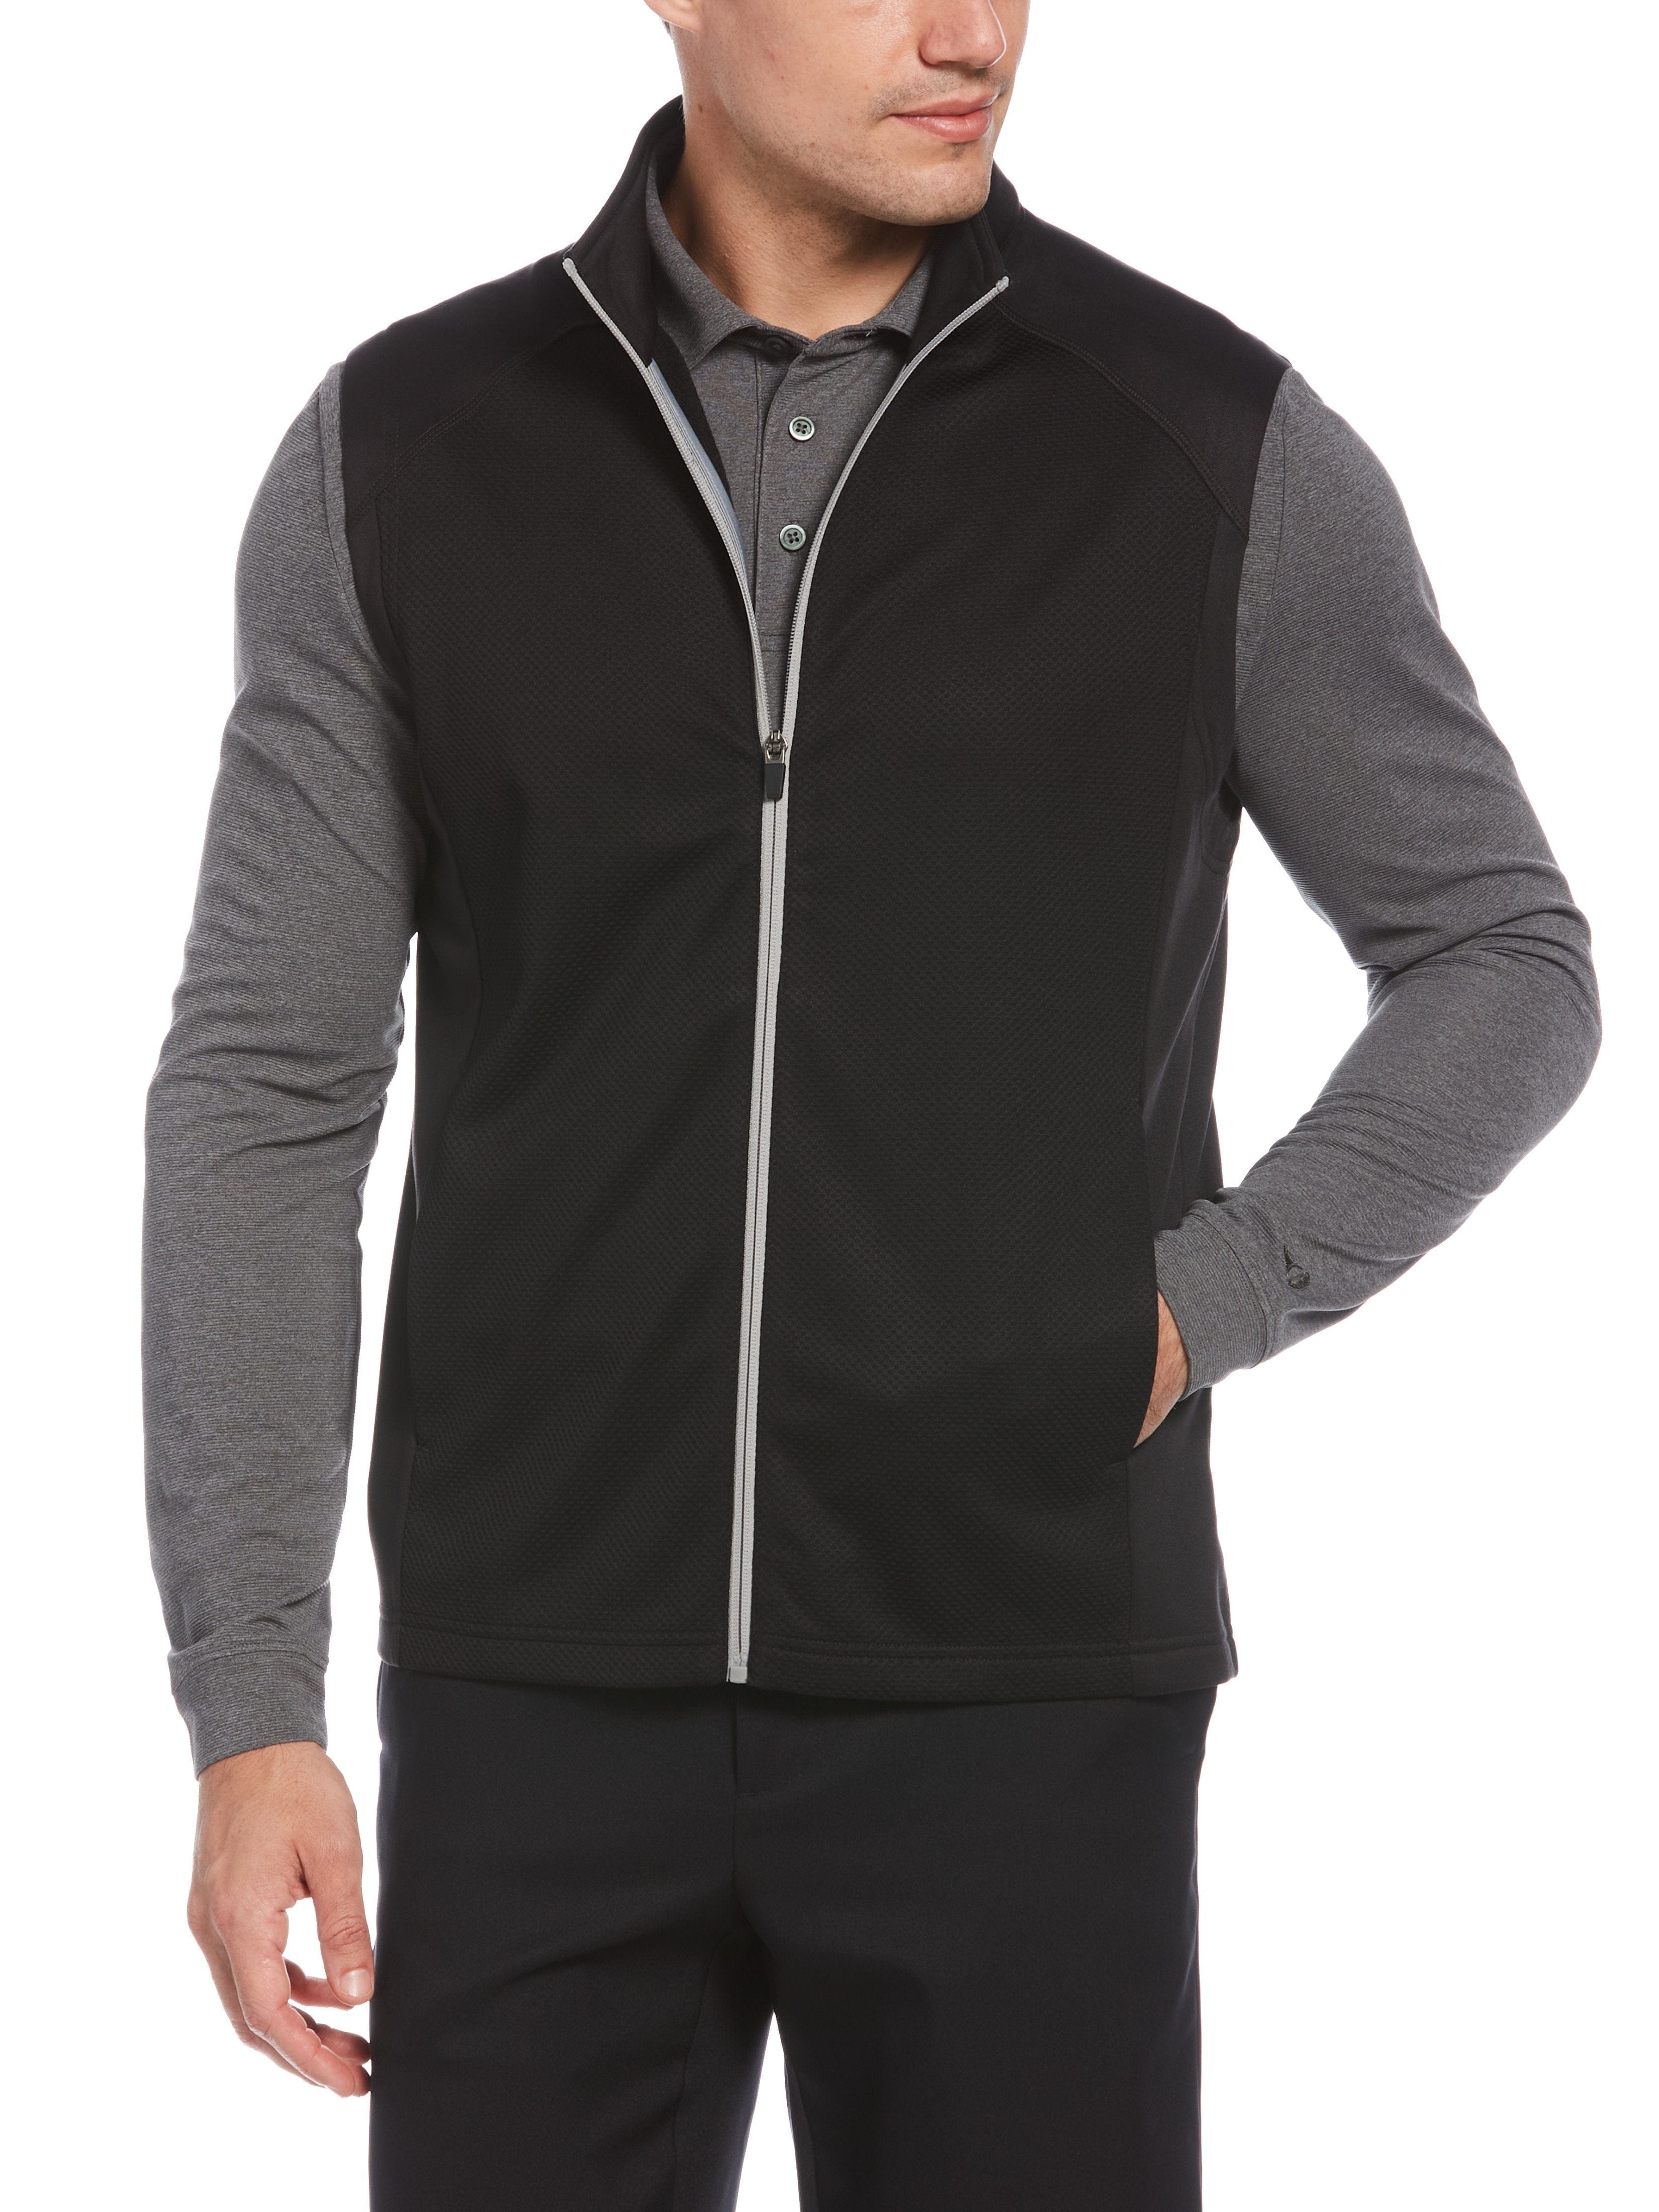 PGA TOUR Apparel Mens Mixed Texture Fleece Golf Vest Top, Size XL, Black, 100% Polyester | Golf Apparel Shop